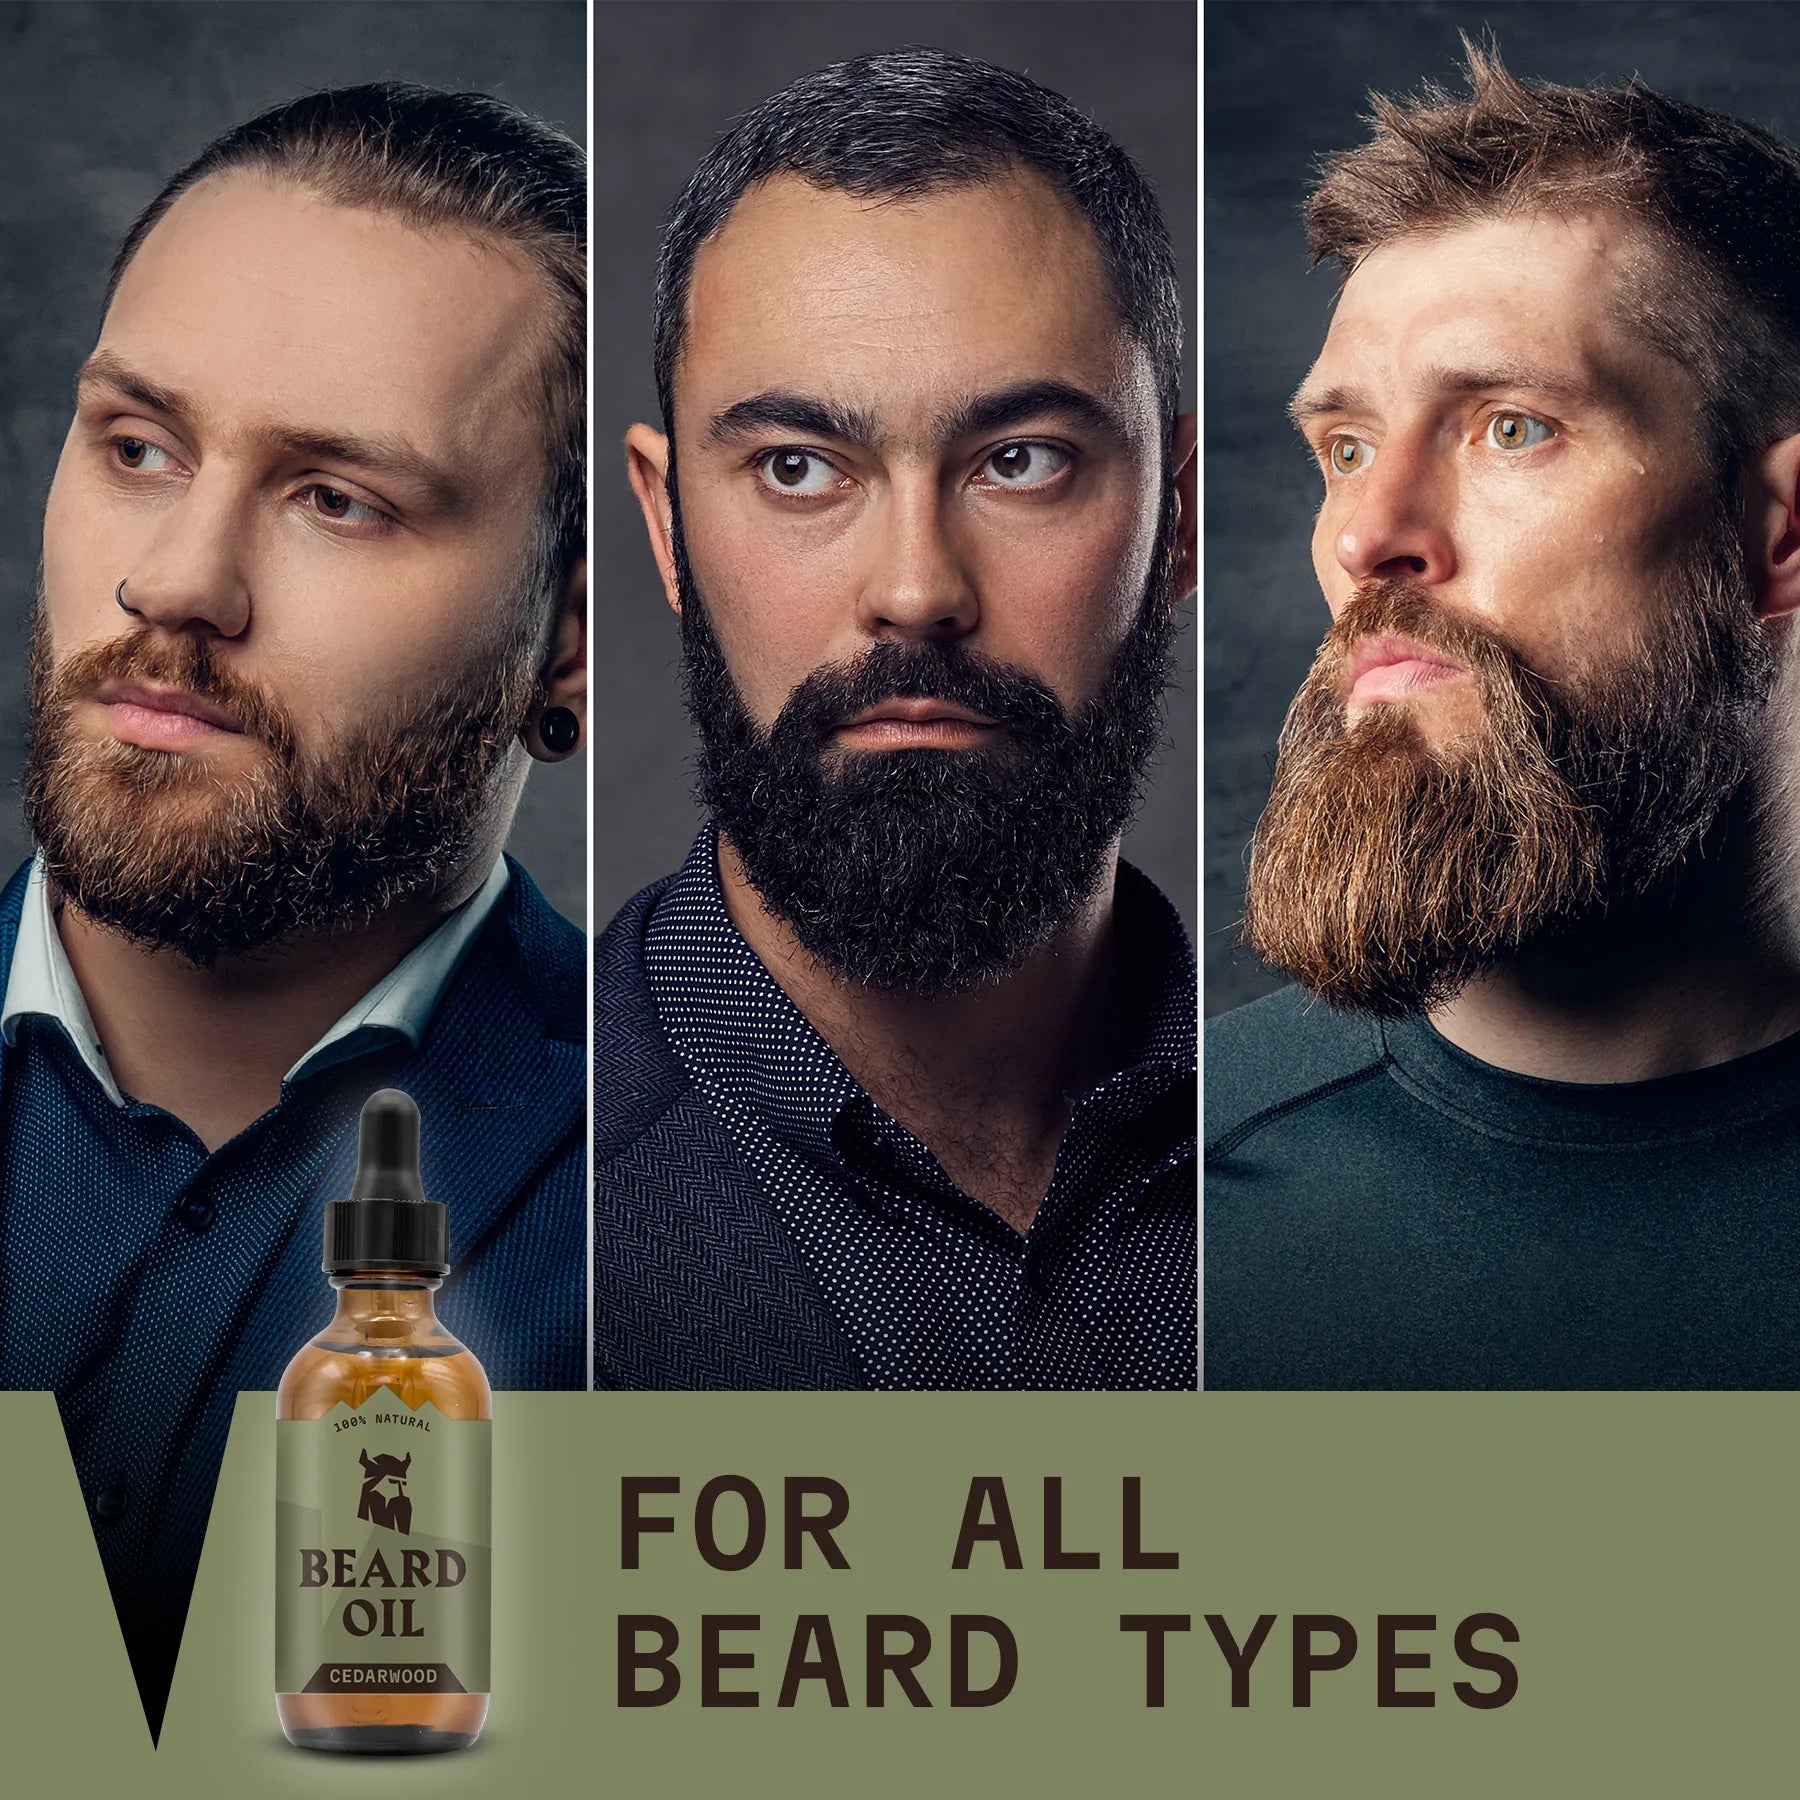 Beard Oil (Cedarwood)